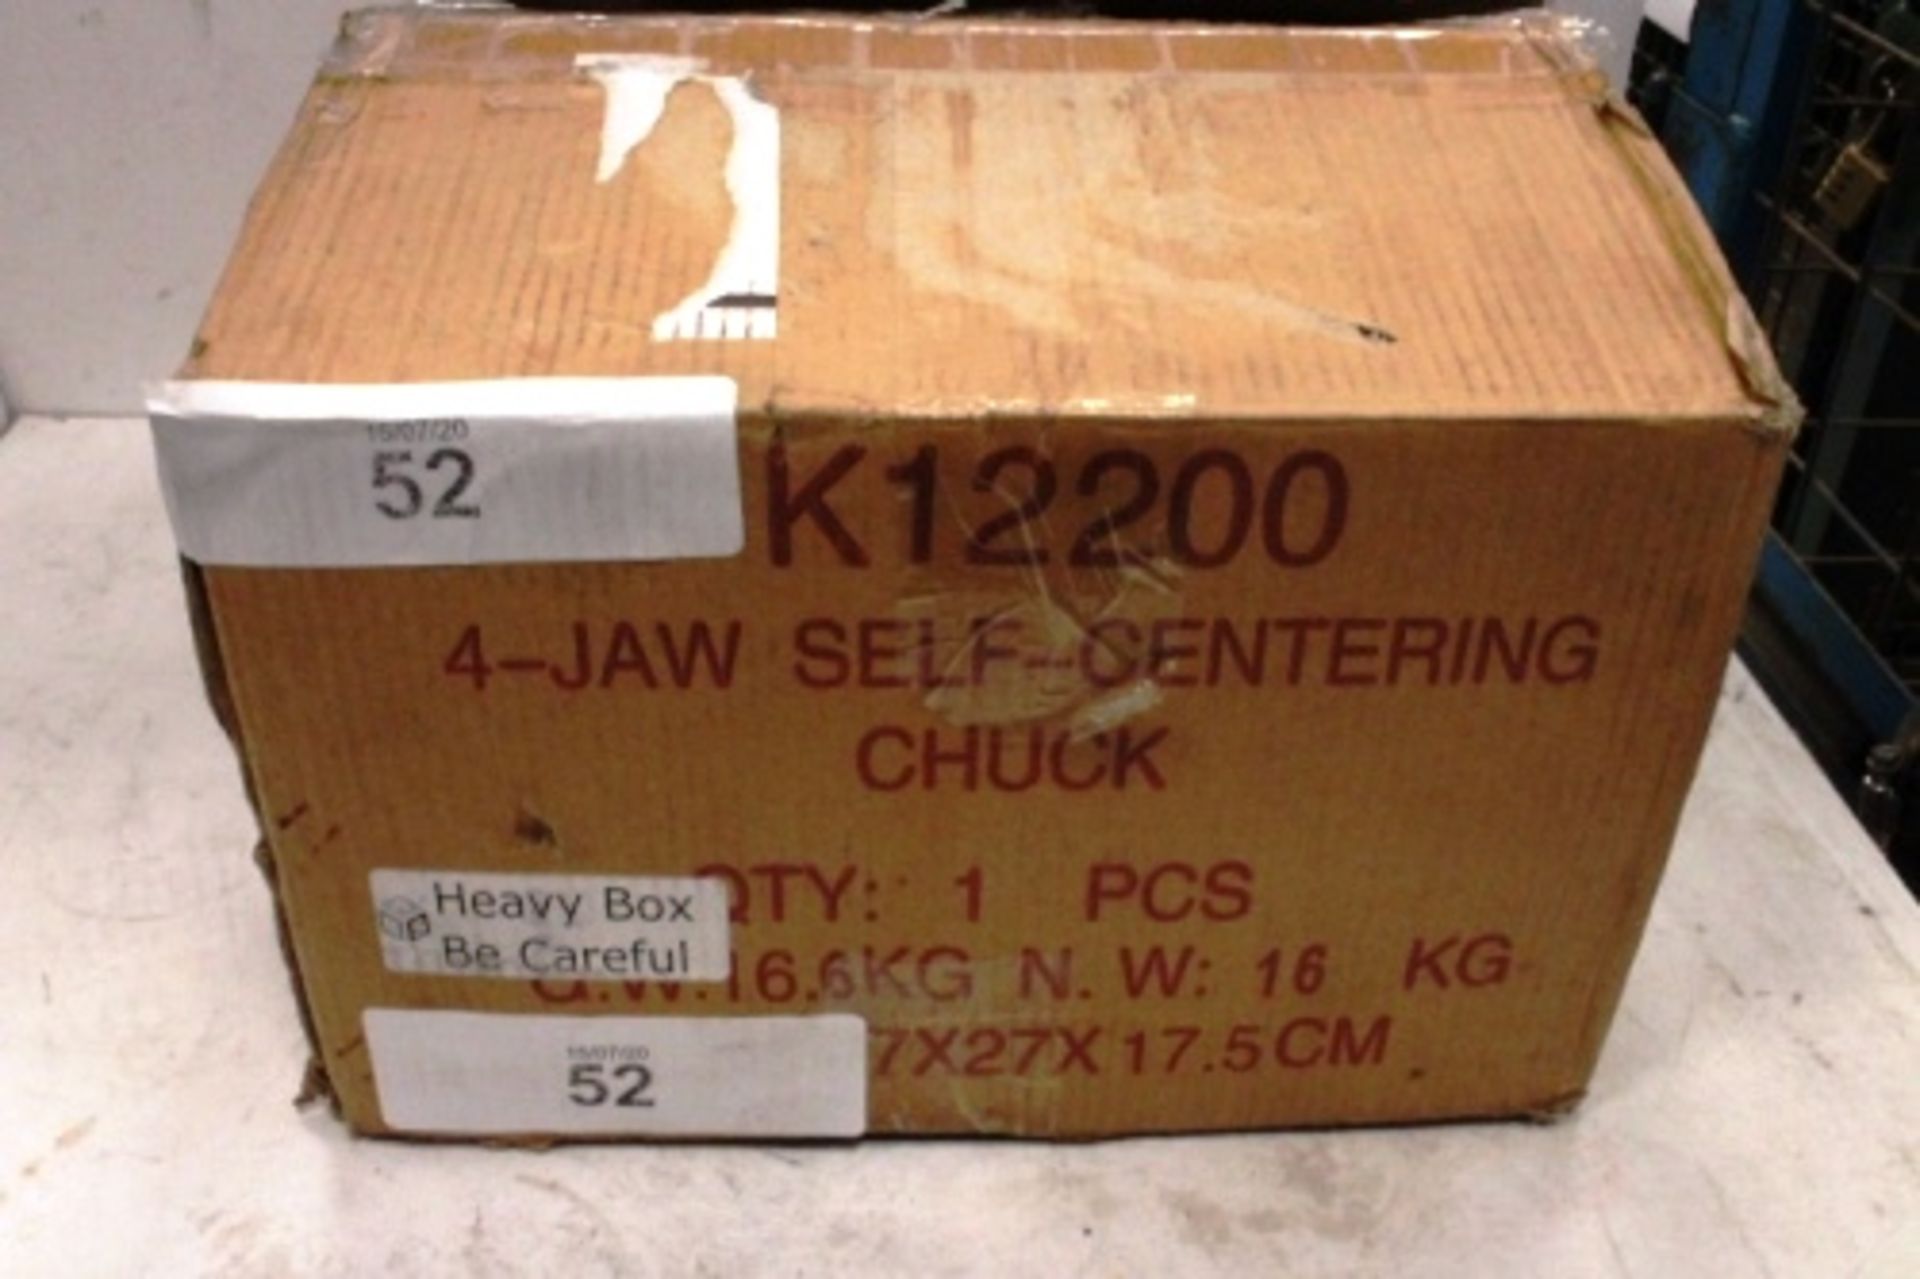 1 x 4 jaw self-centering chuck, model K12200 - New (TC4) - Image 3 of 3